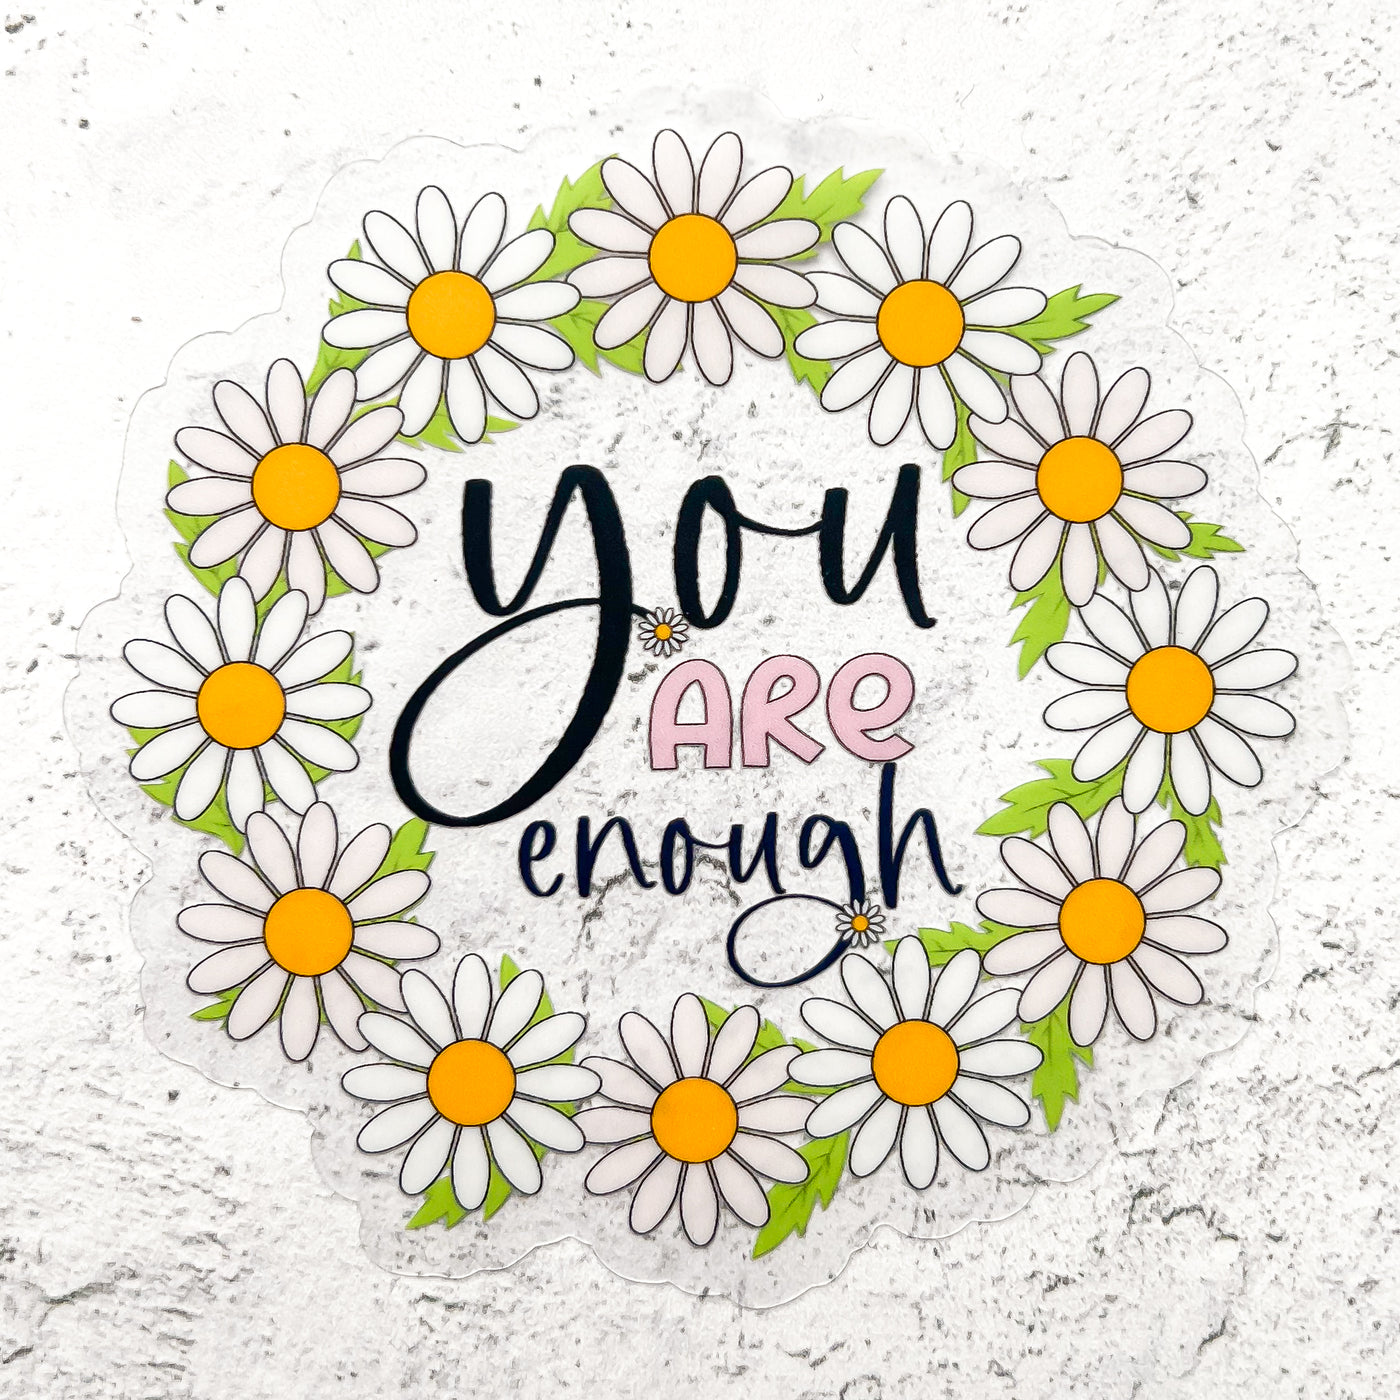 You are enough daisy vinyl sticker by Simpliday Paper, Olga Nagorna.